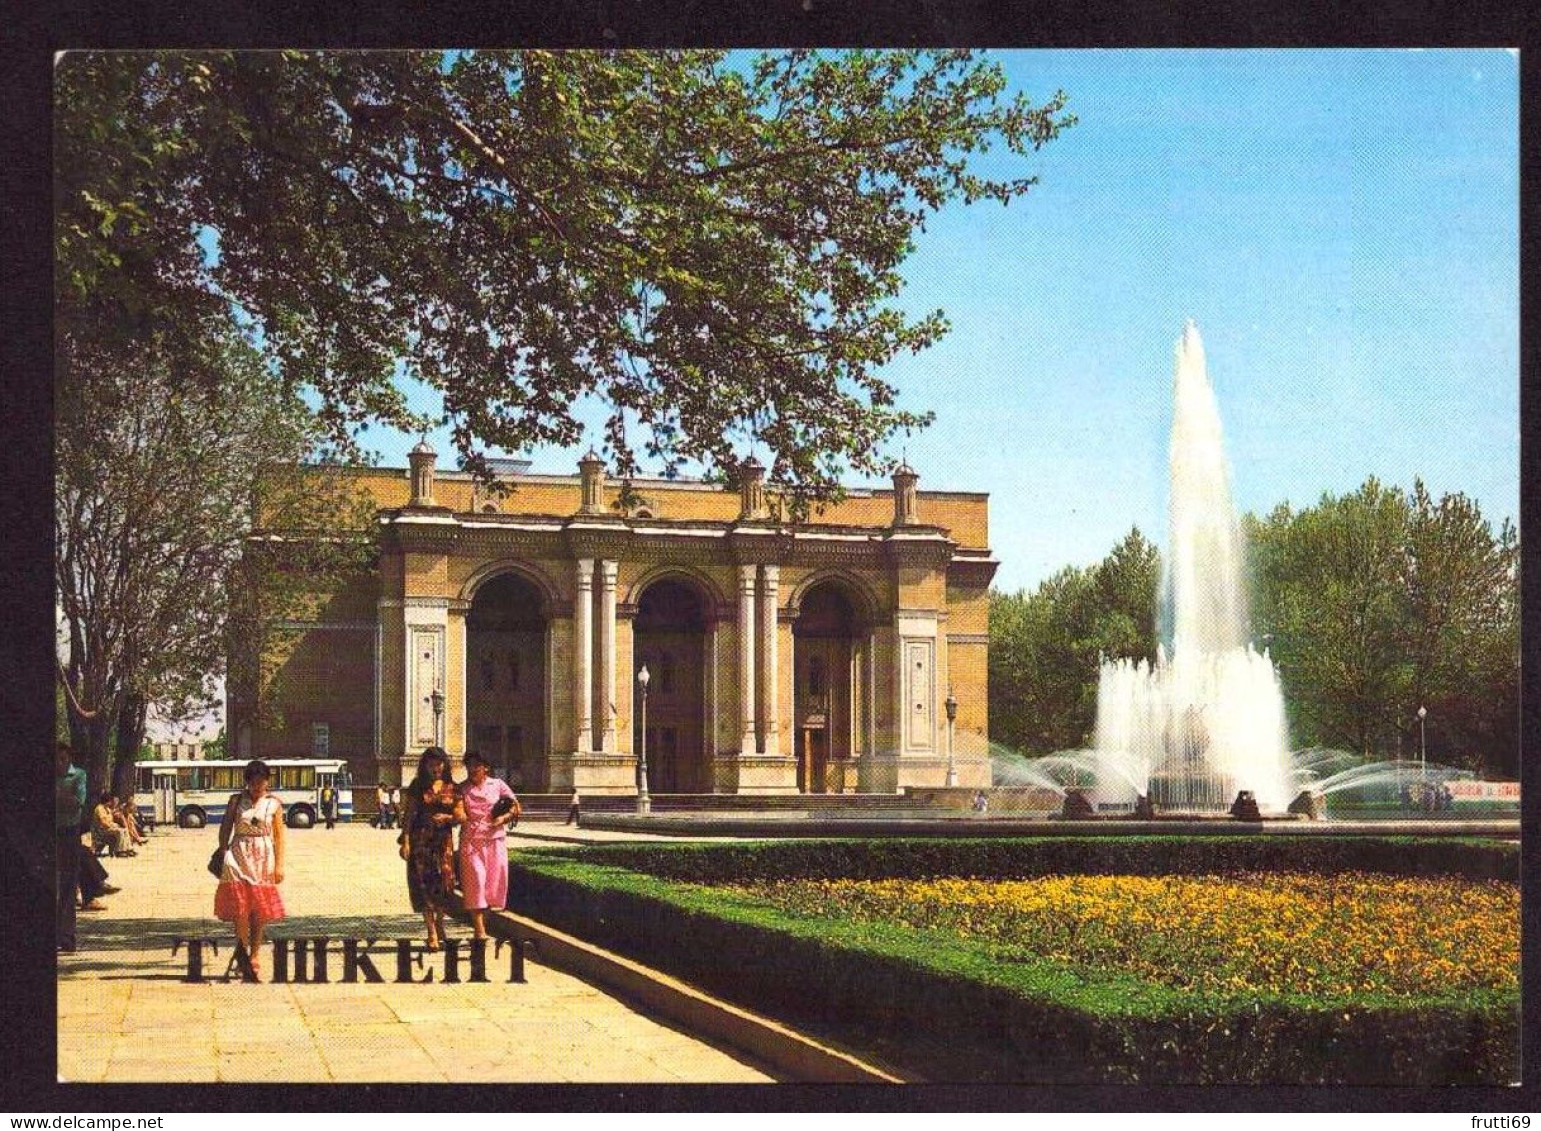 AK 212333 UZBEKISTAN - Tashkent - Teatralnaya Square - Uzbekistan